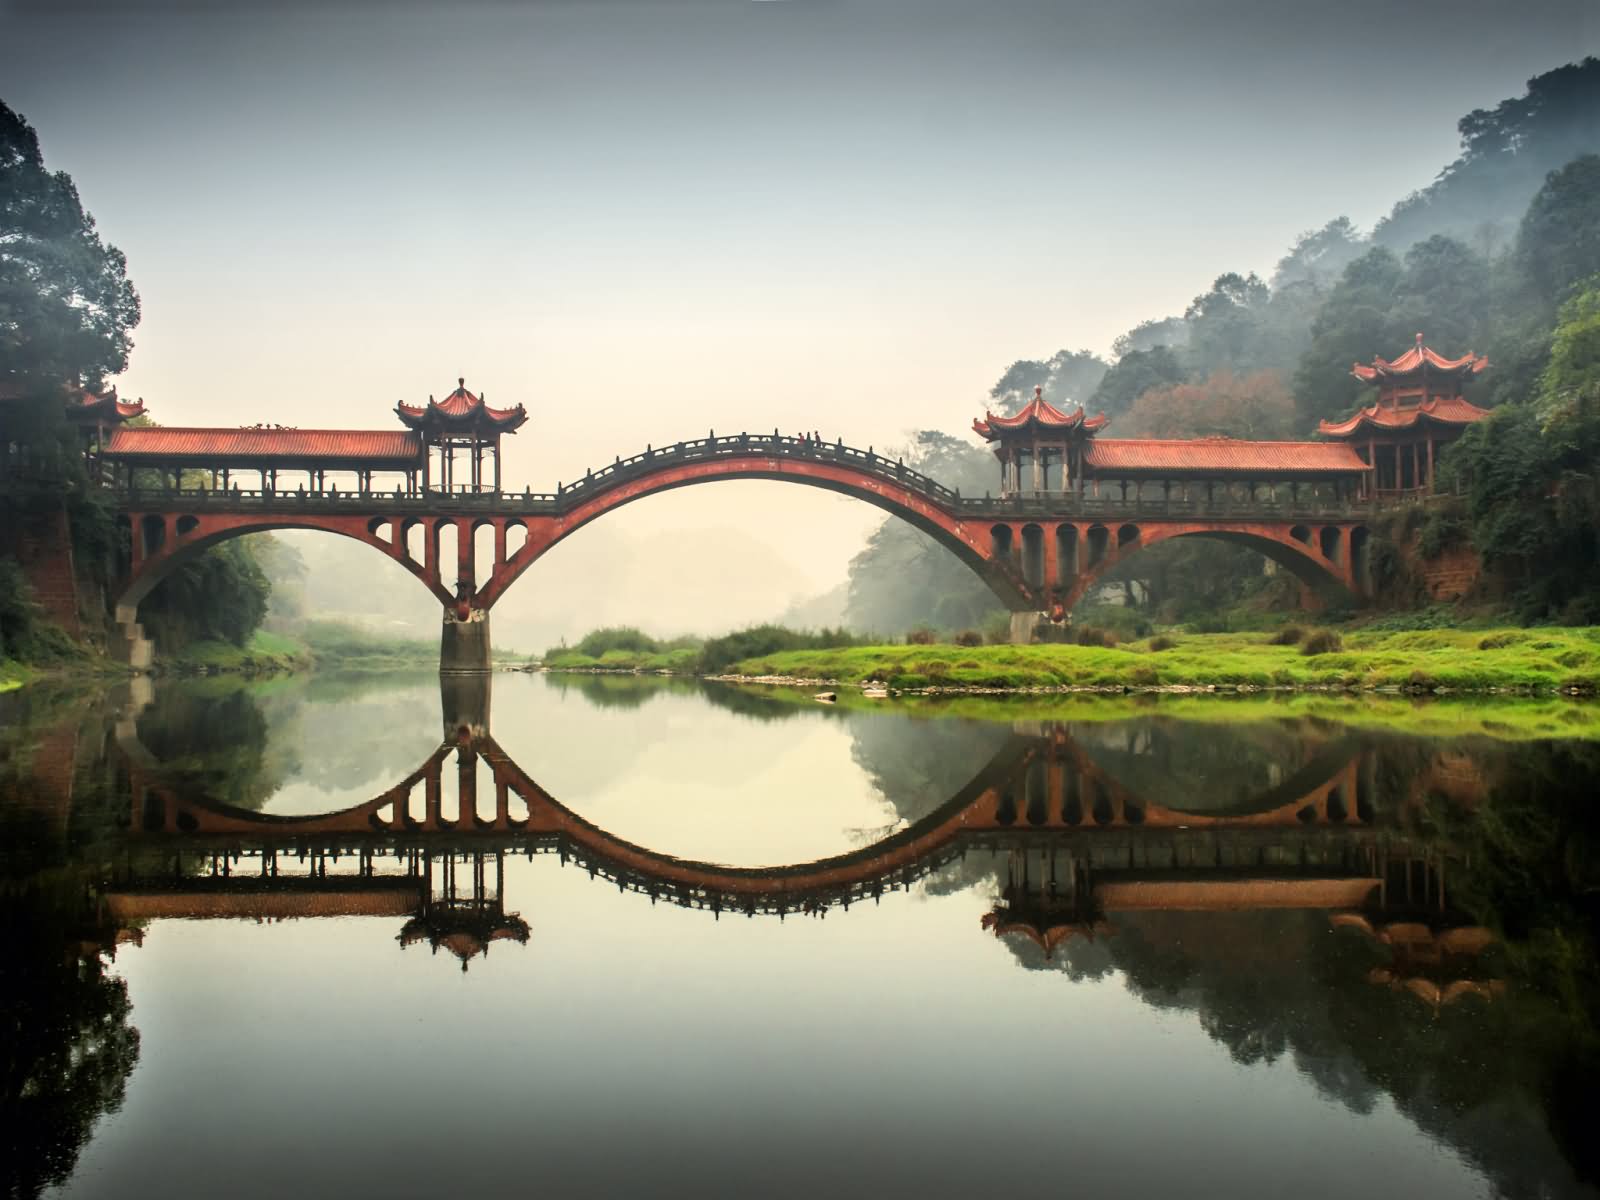 Water Reflection Of Leshan Giant Buddha Bridge, China